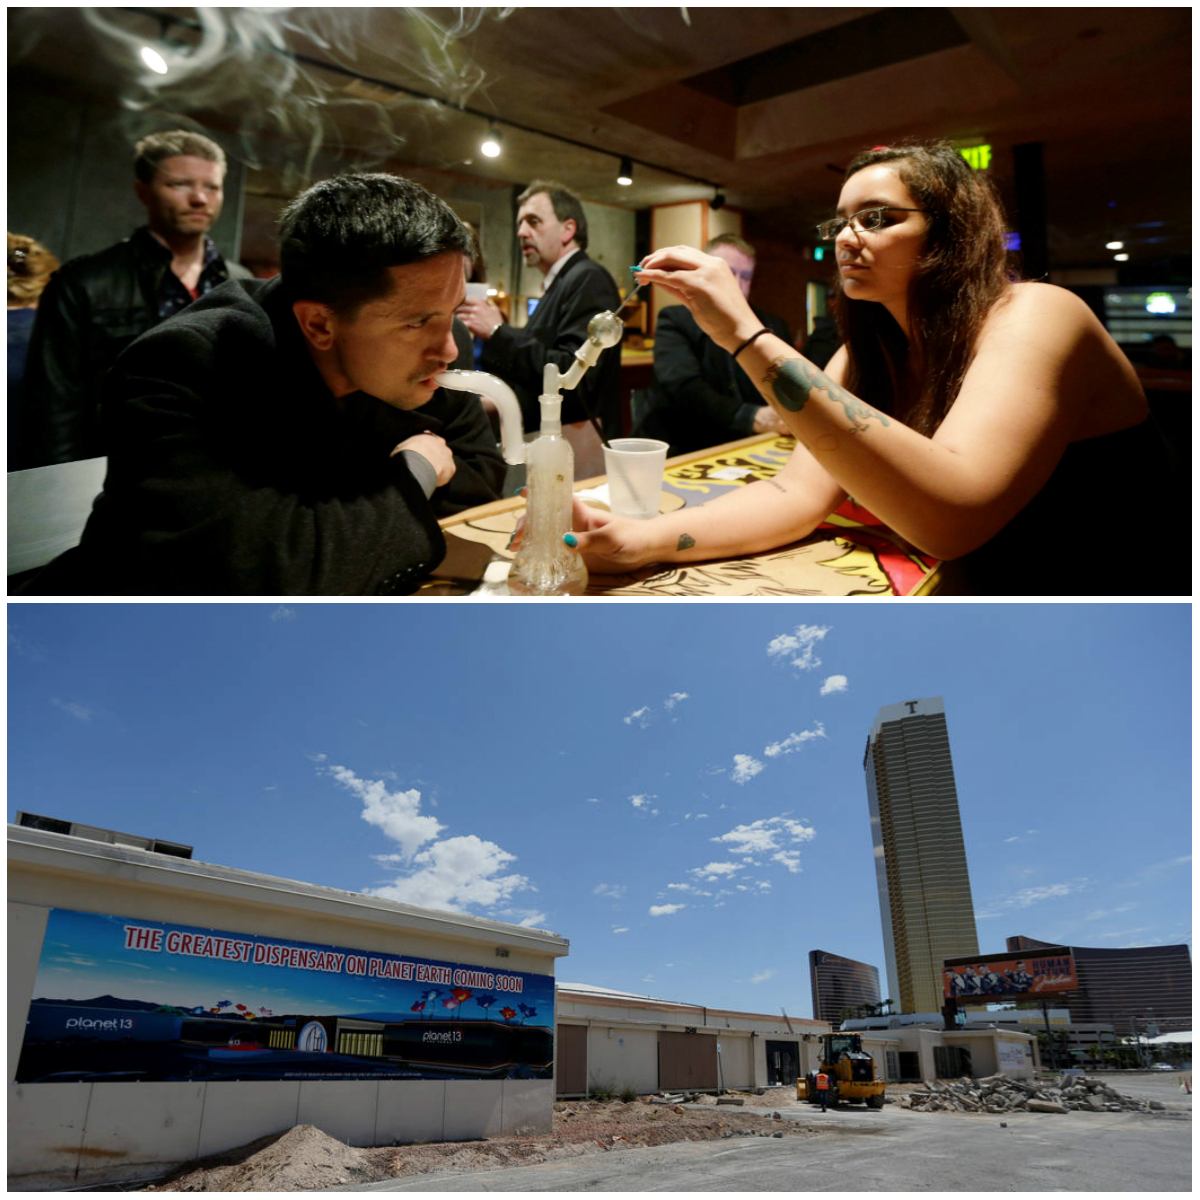 Marijuana lounges have nevada casino industry on alert